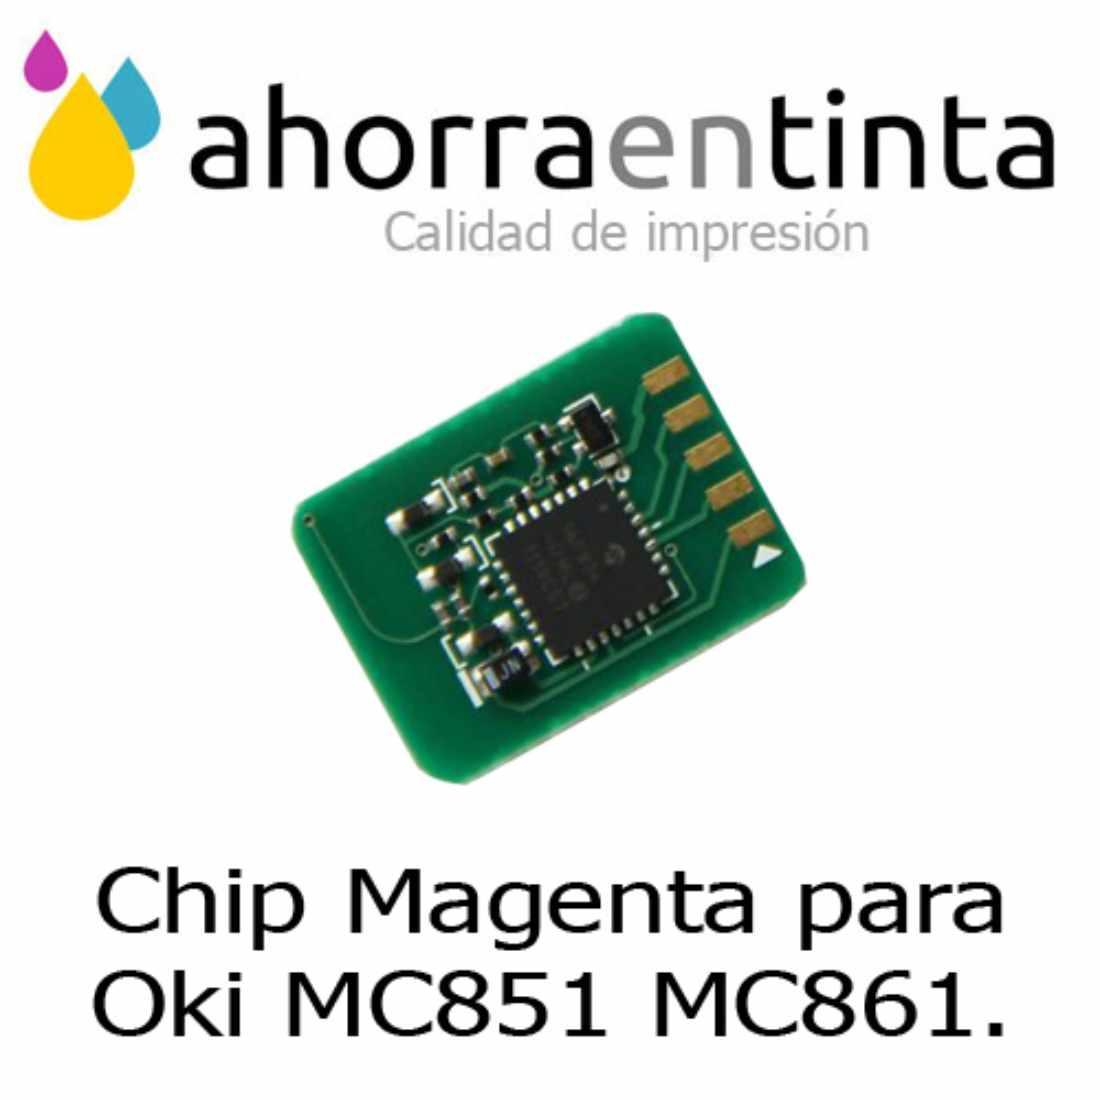 Foto de producto Chip Magenta para Oki MC851 MC